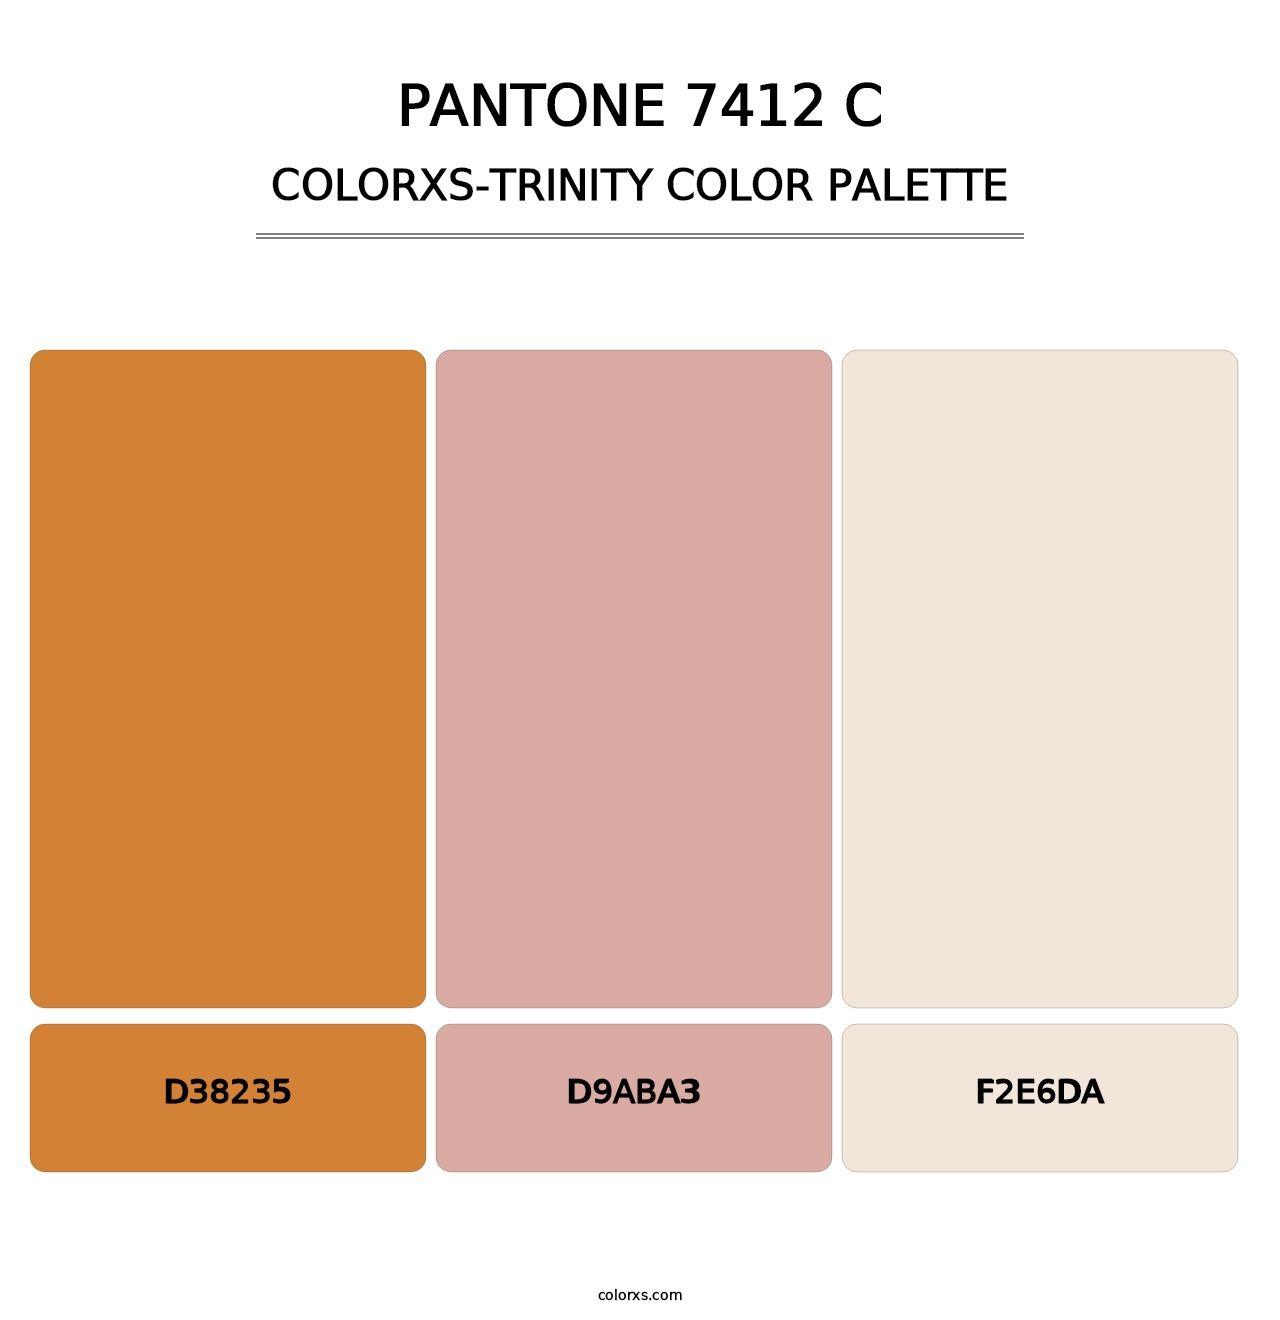 PANTONE 7412 C - Colorxs Trinity Palette